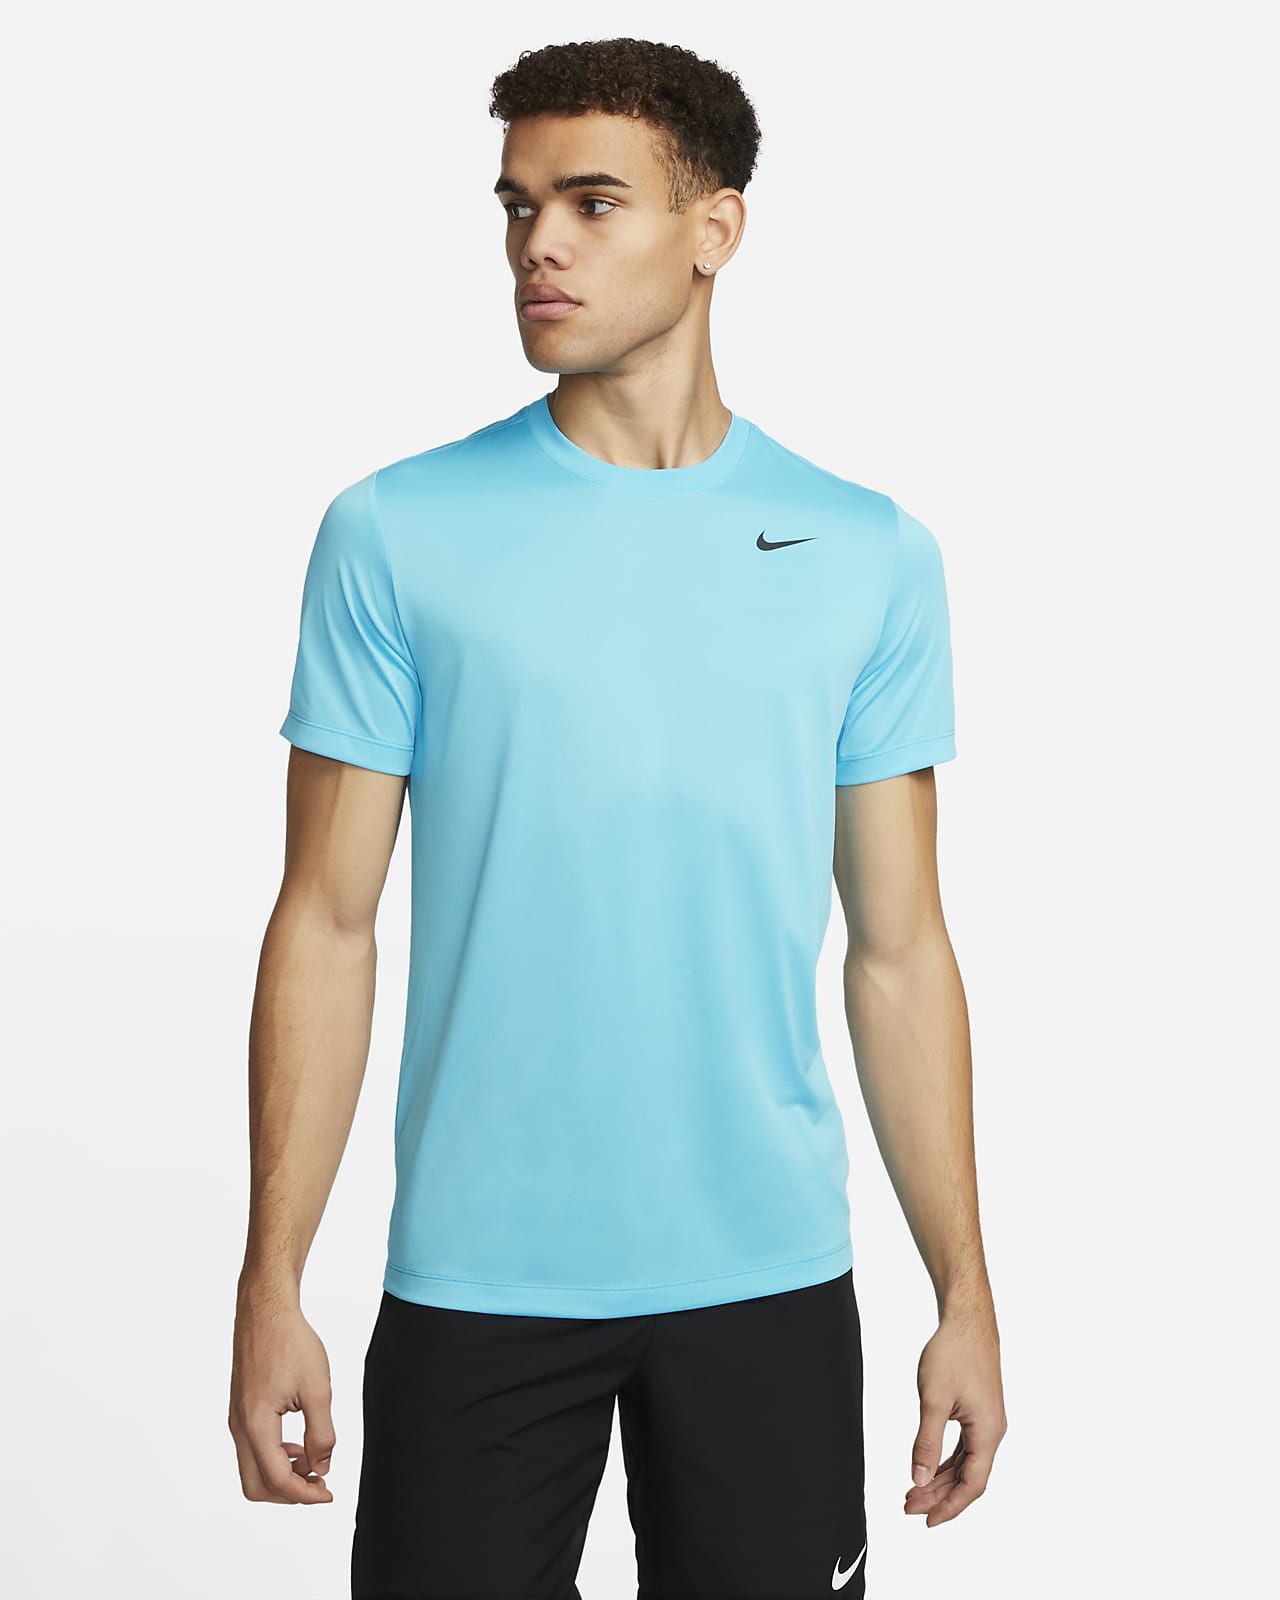 Ausencia jefe Exactamente Nike Dri-FIT Men's Fitness T-Shirt. Nike IN